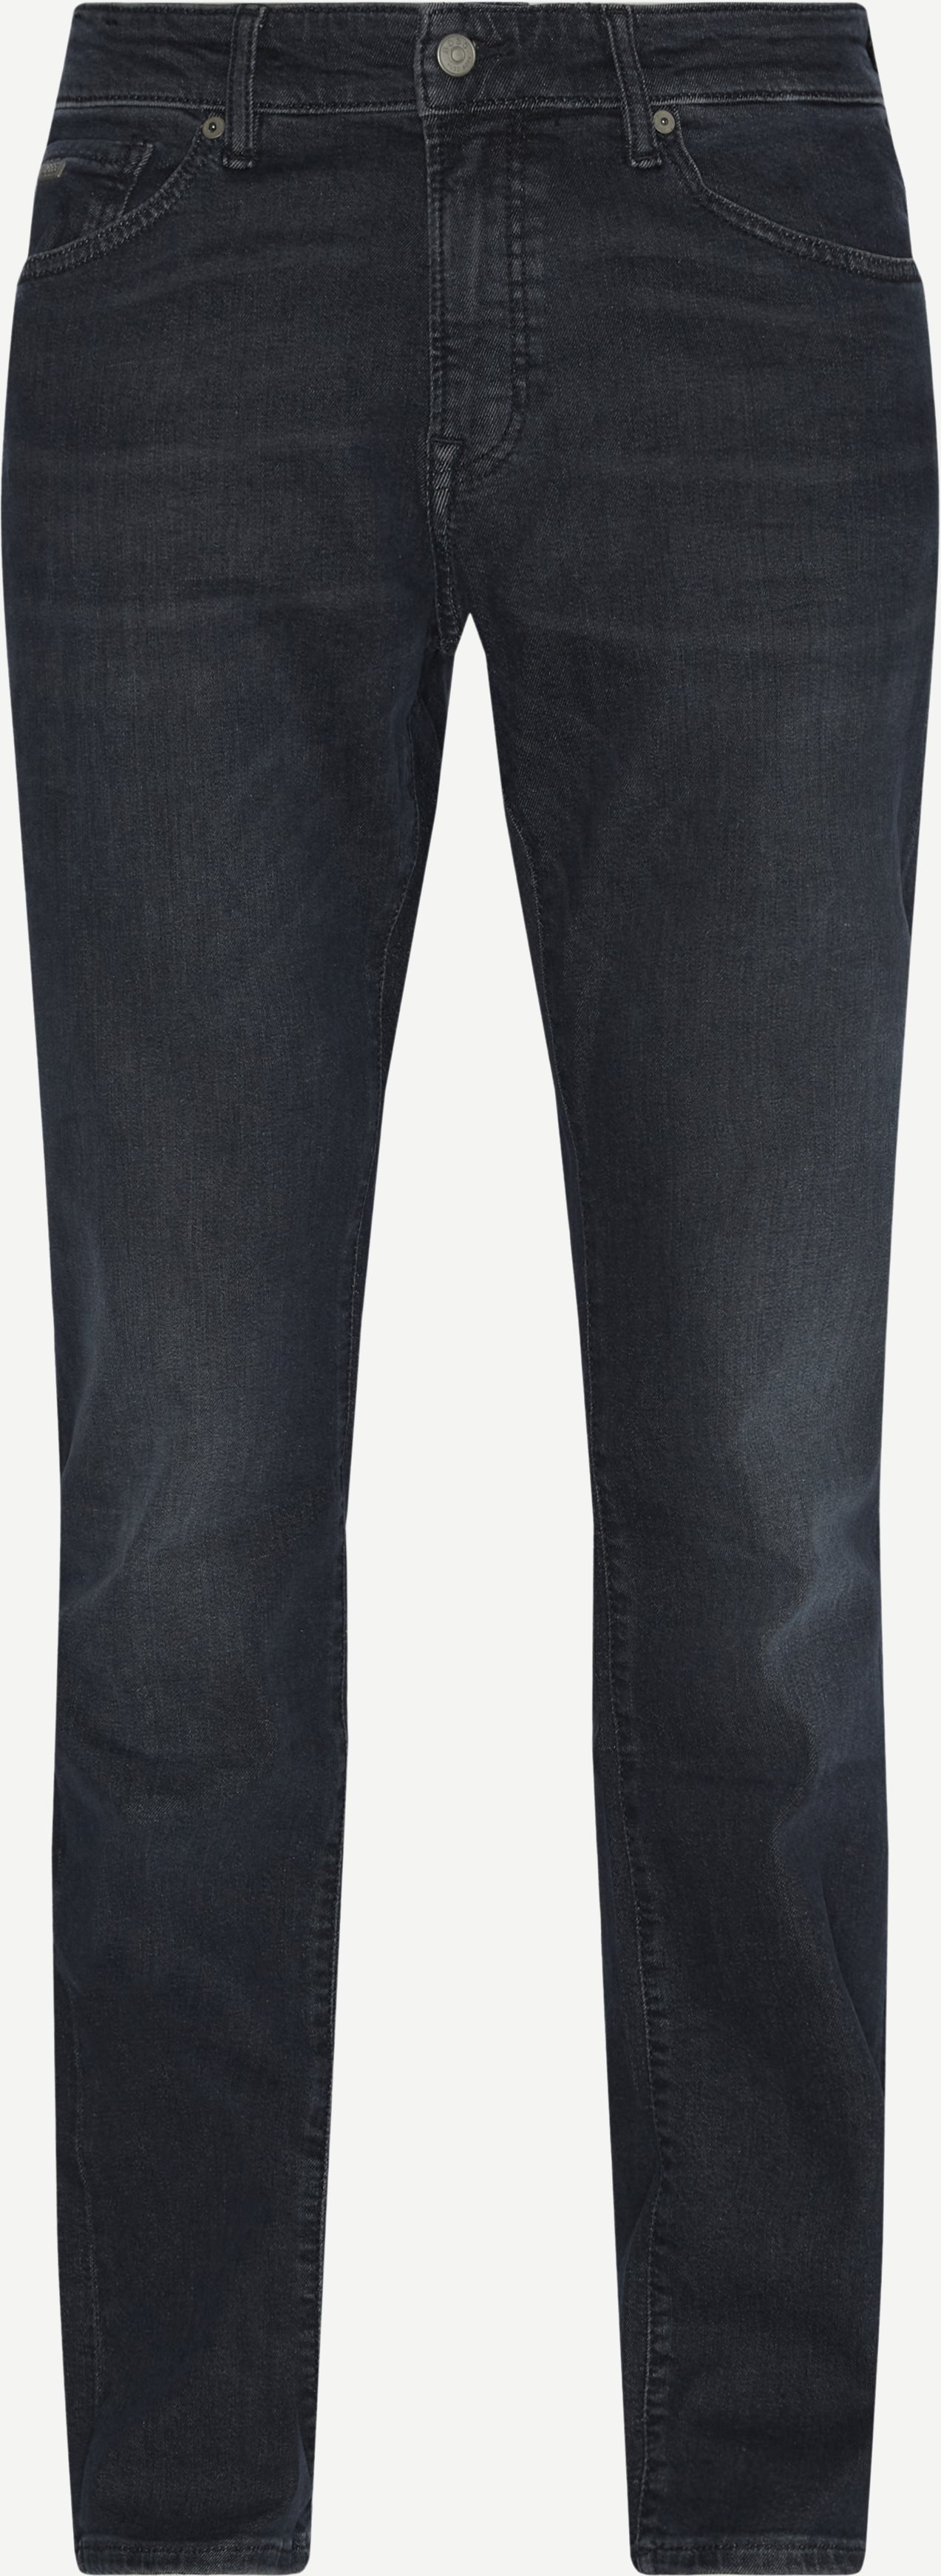 Maine Jeans - Jeans - Regular fit - Denim